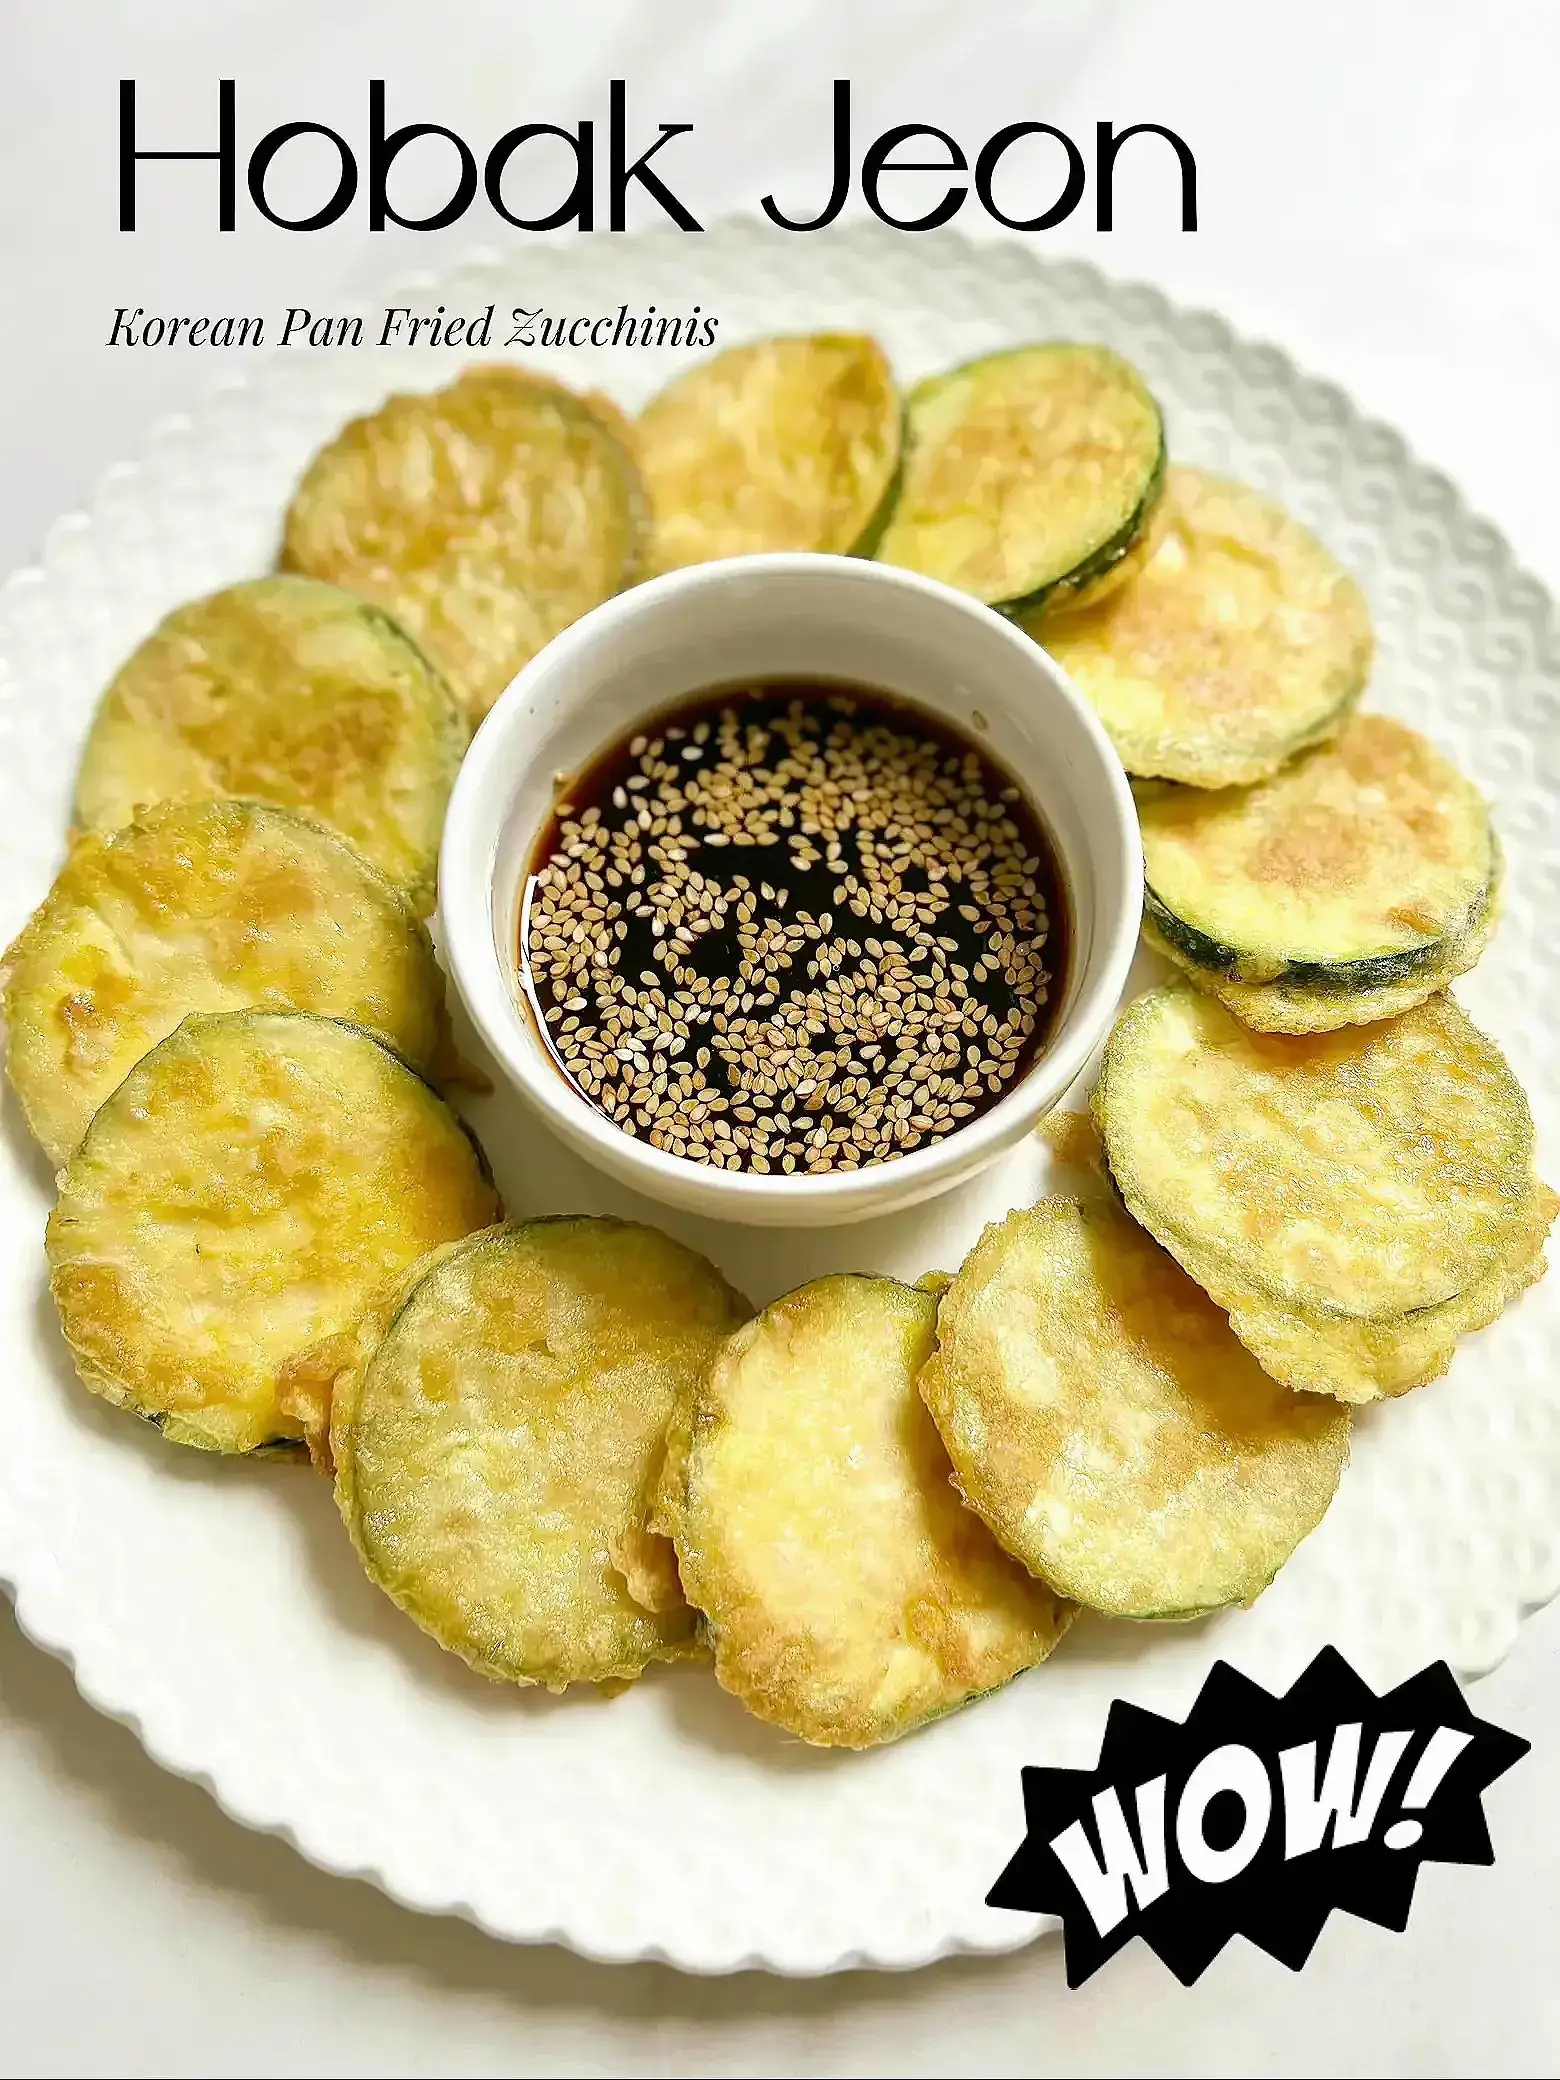 Pan Fried Korean Zucchini (Hobak Jeon) - My Korean Kitchen